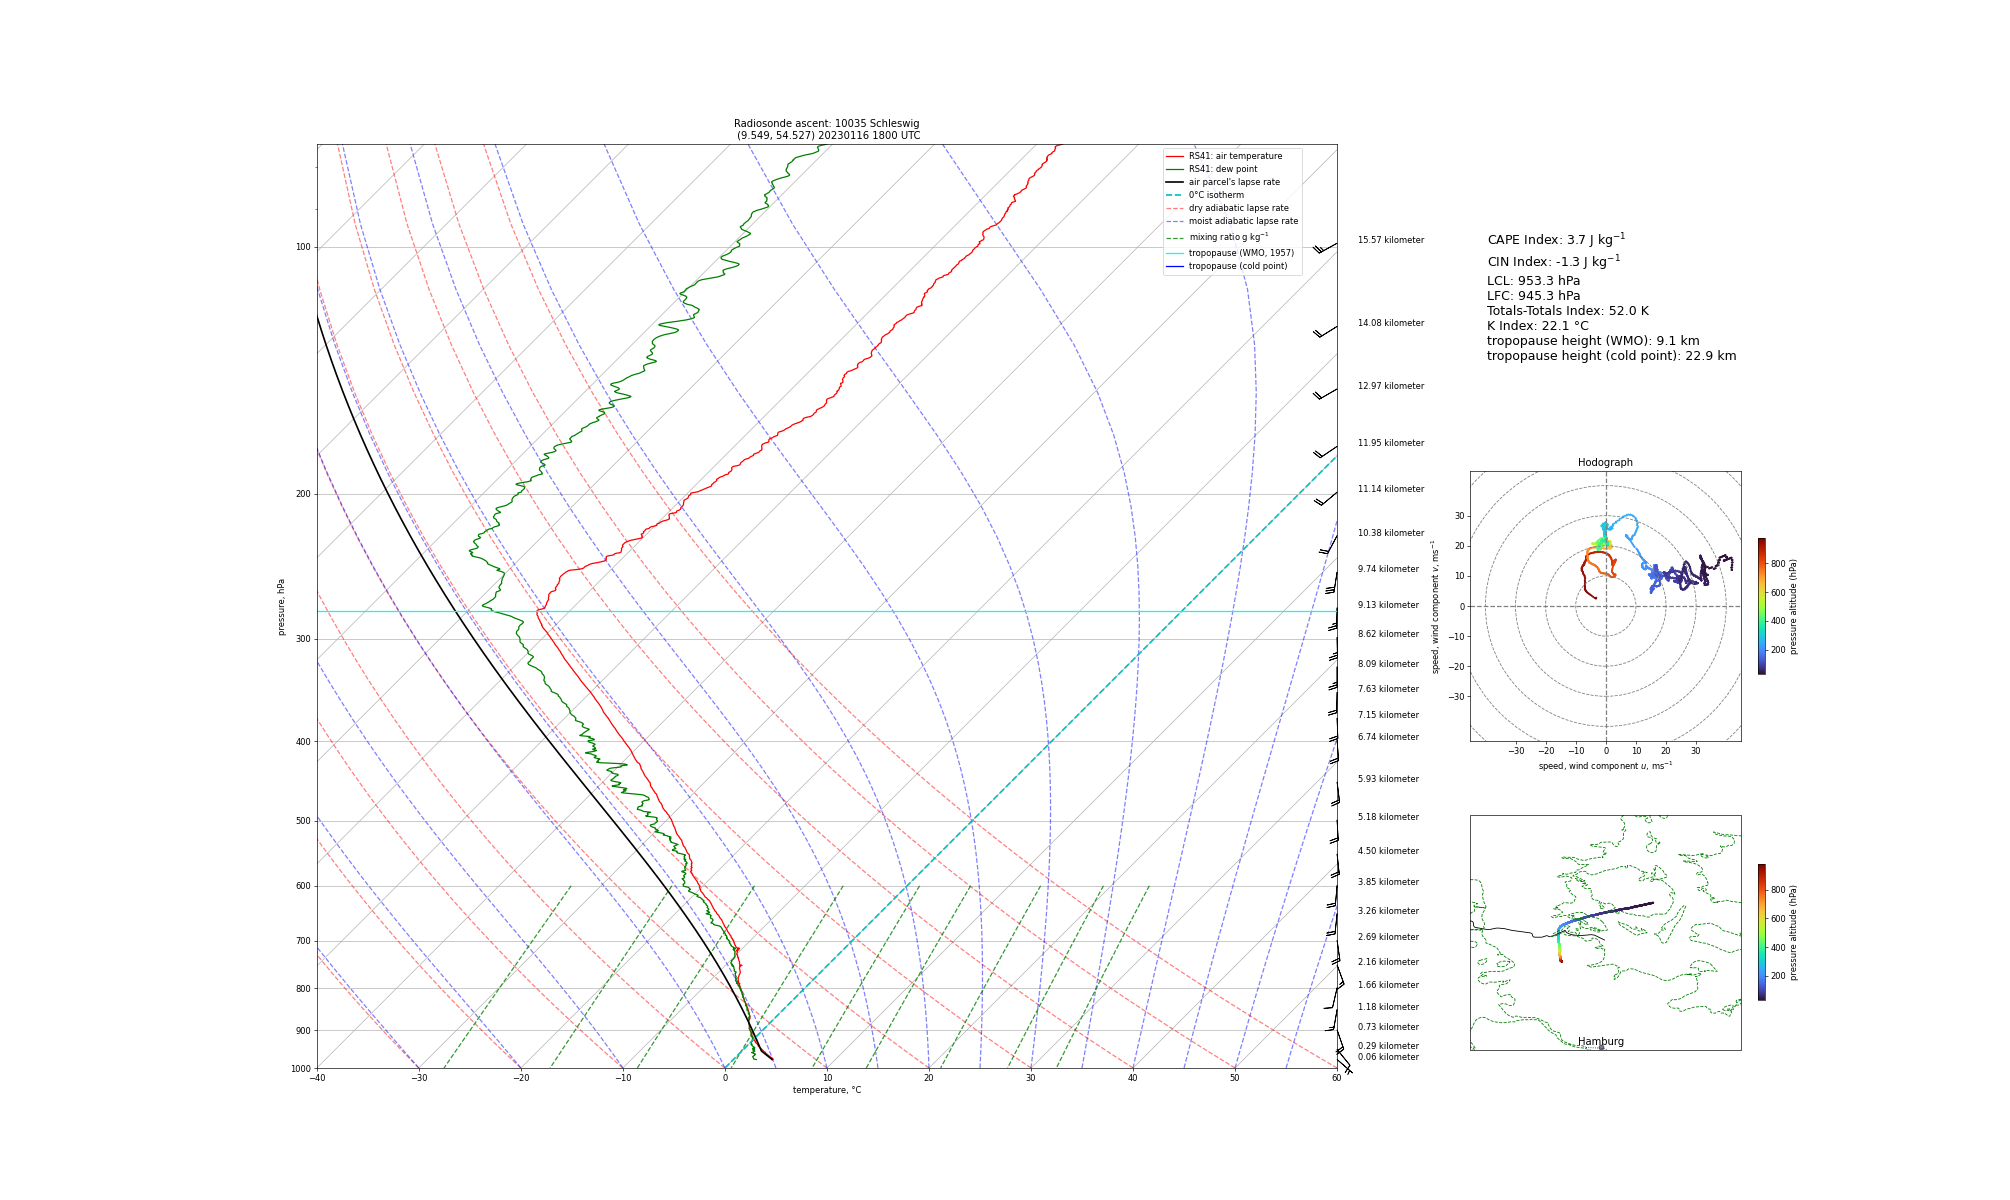 Visualisation of the radiosounding profile at Schleswig at 1800 UTC